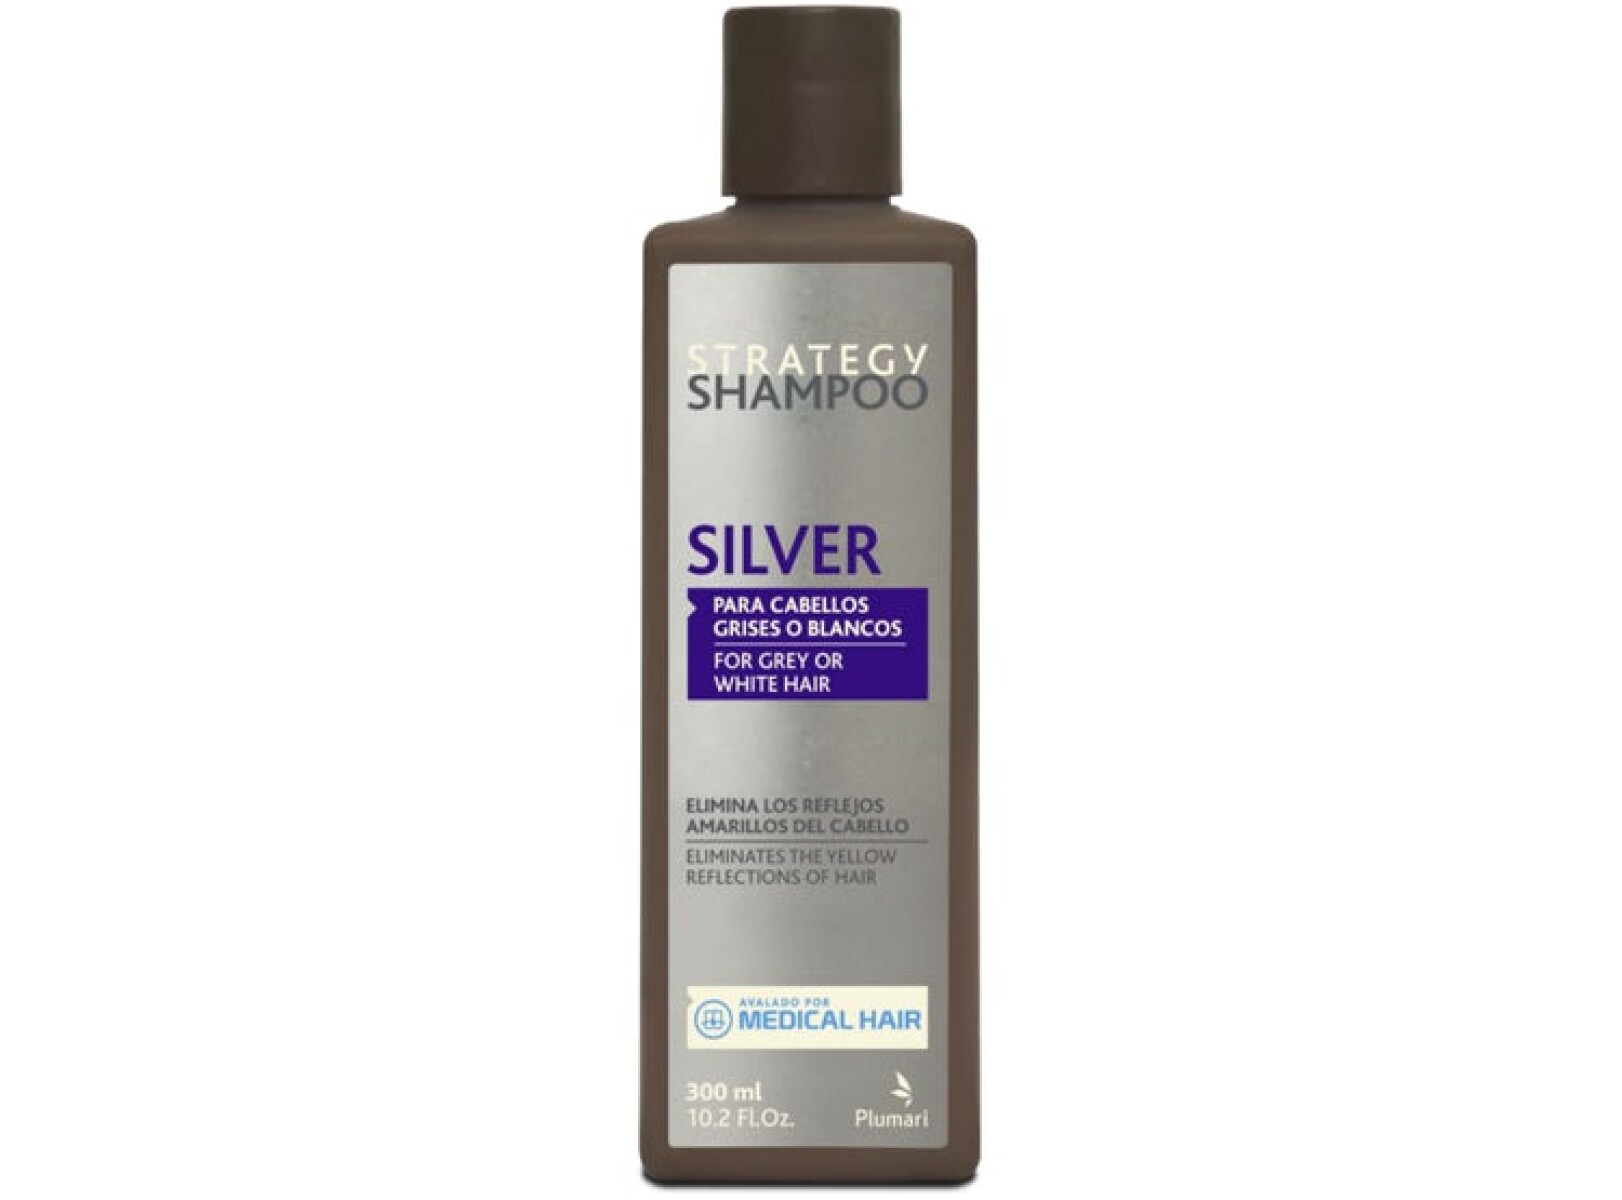 Strategy Shampoo Slver 300ml 